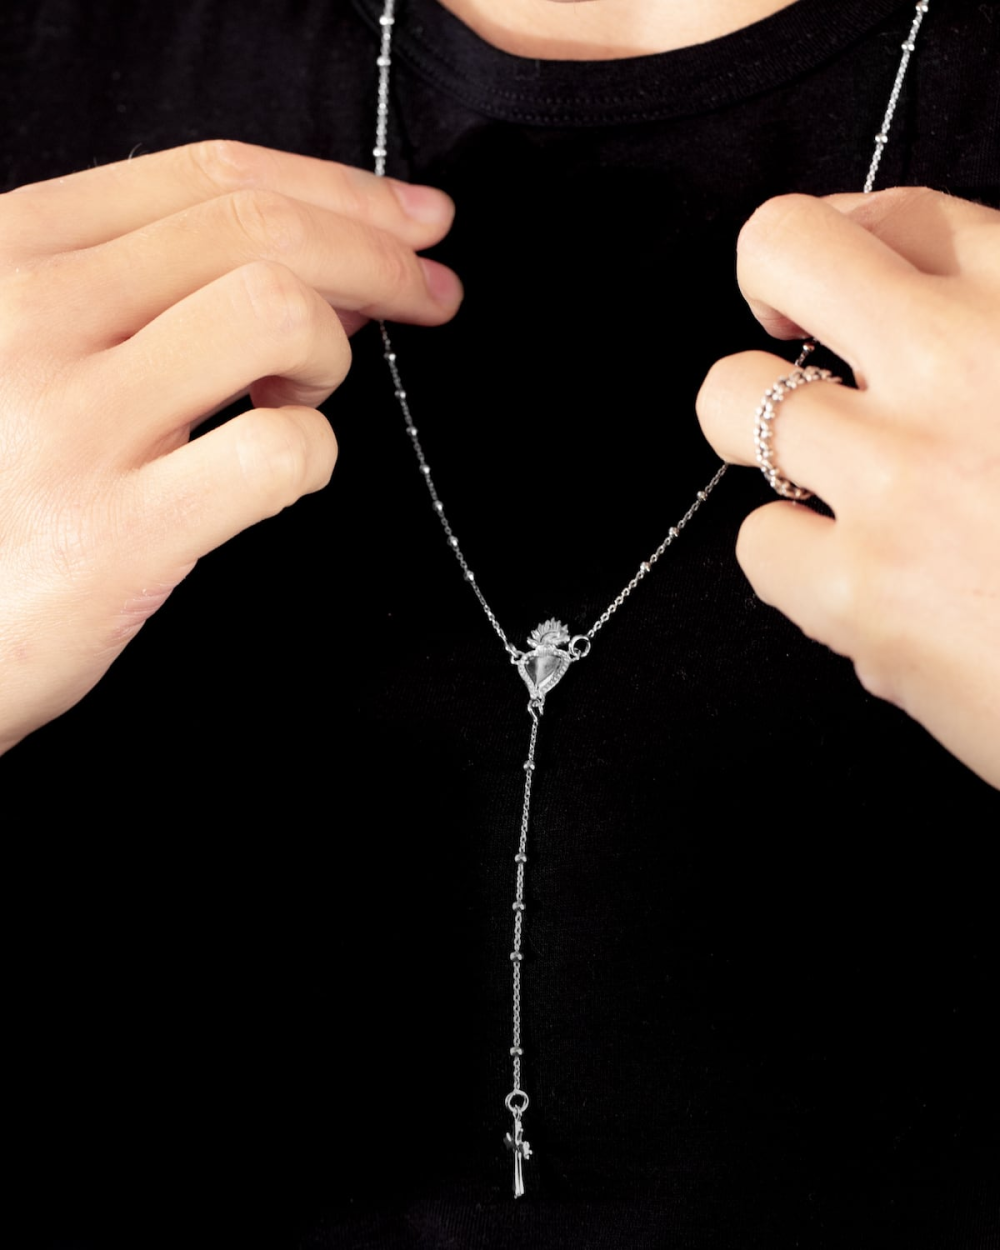 Rosary Necklace 45 cm - Rosè - Black - Pianeta BEADS srls